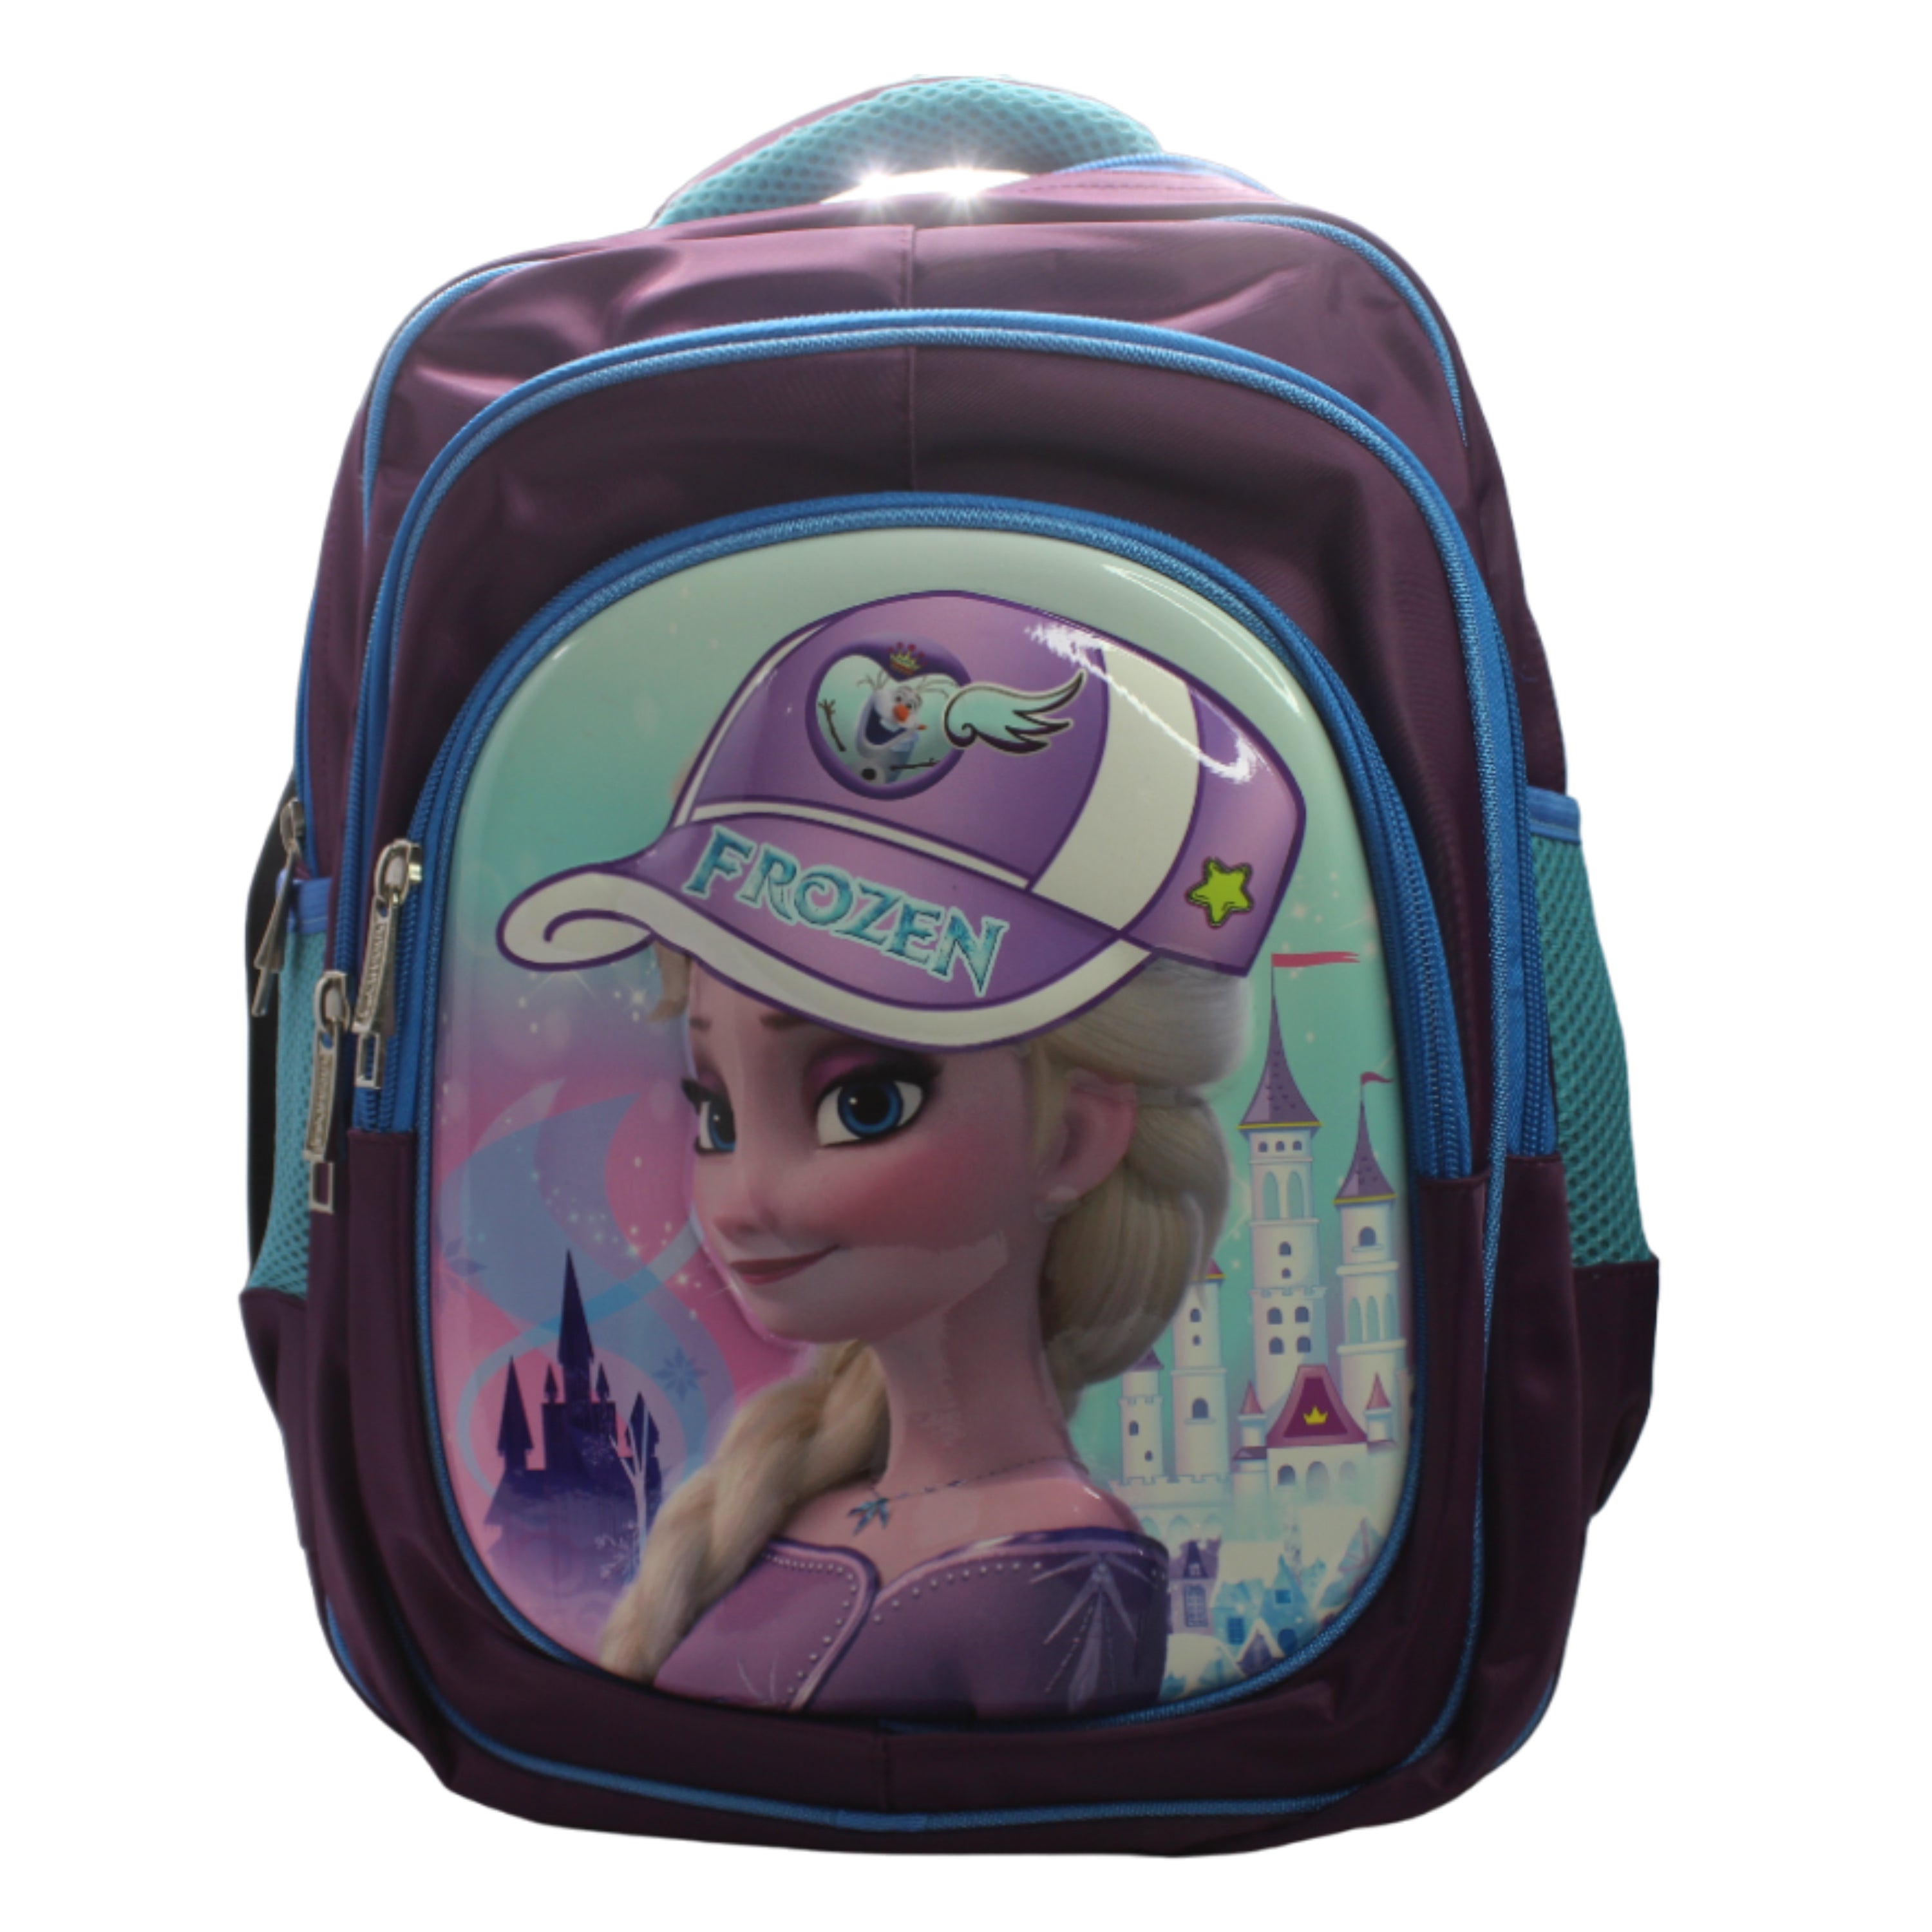 Frozen School bag for Kids Class 1